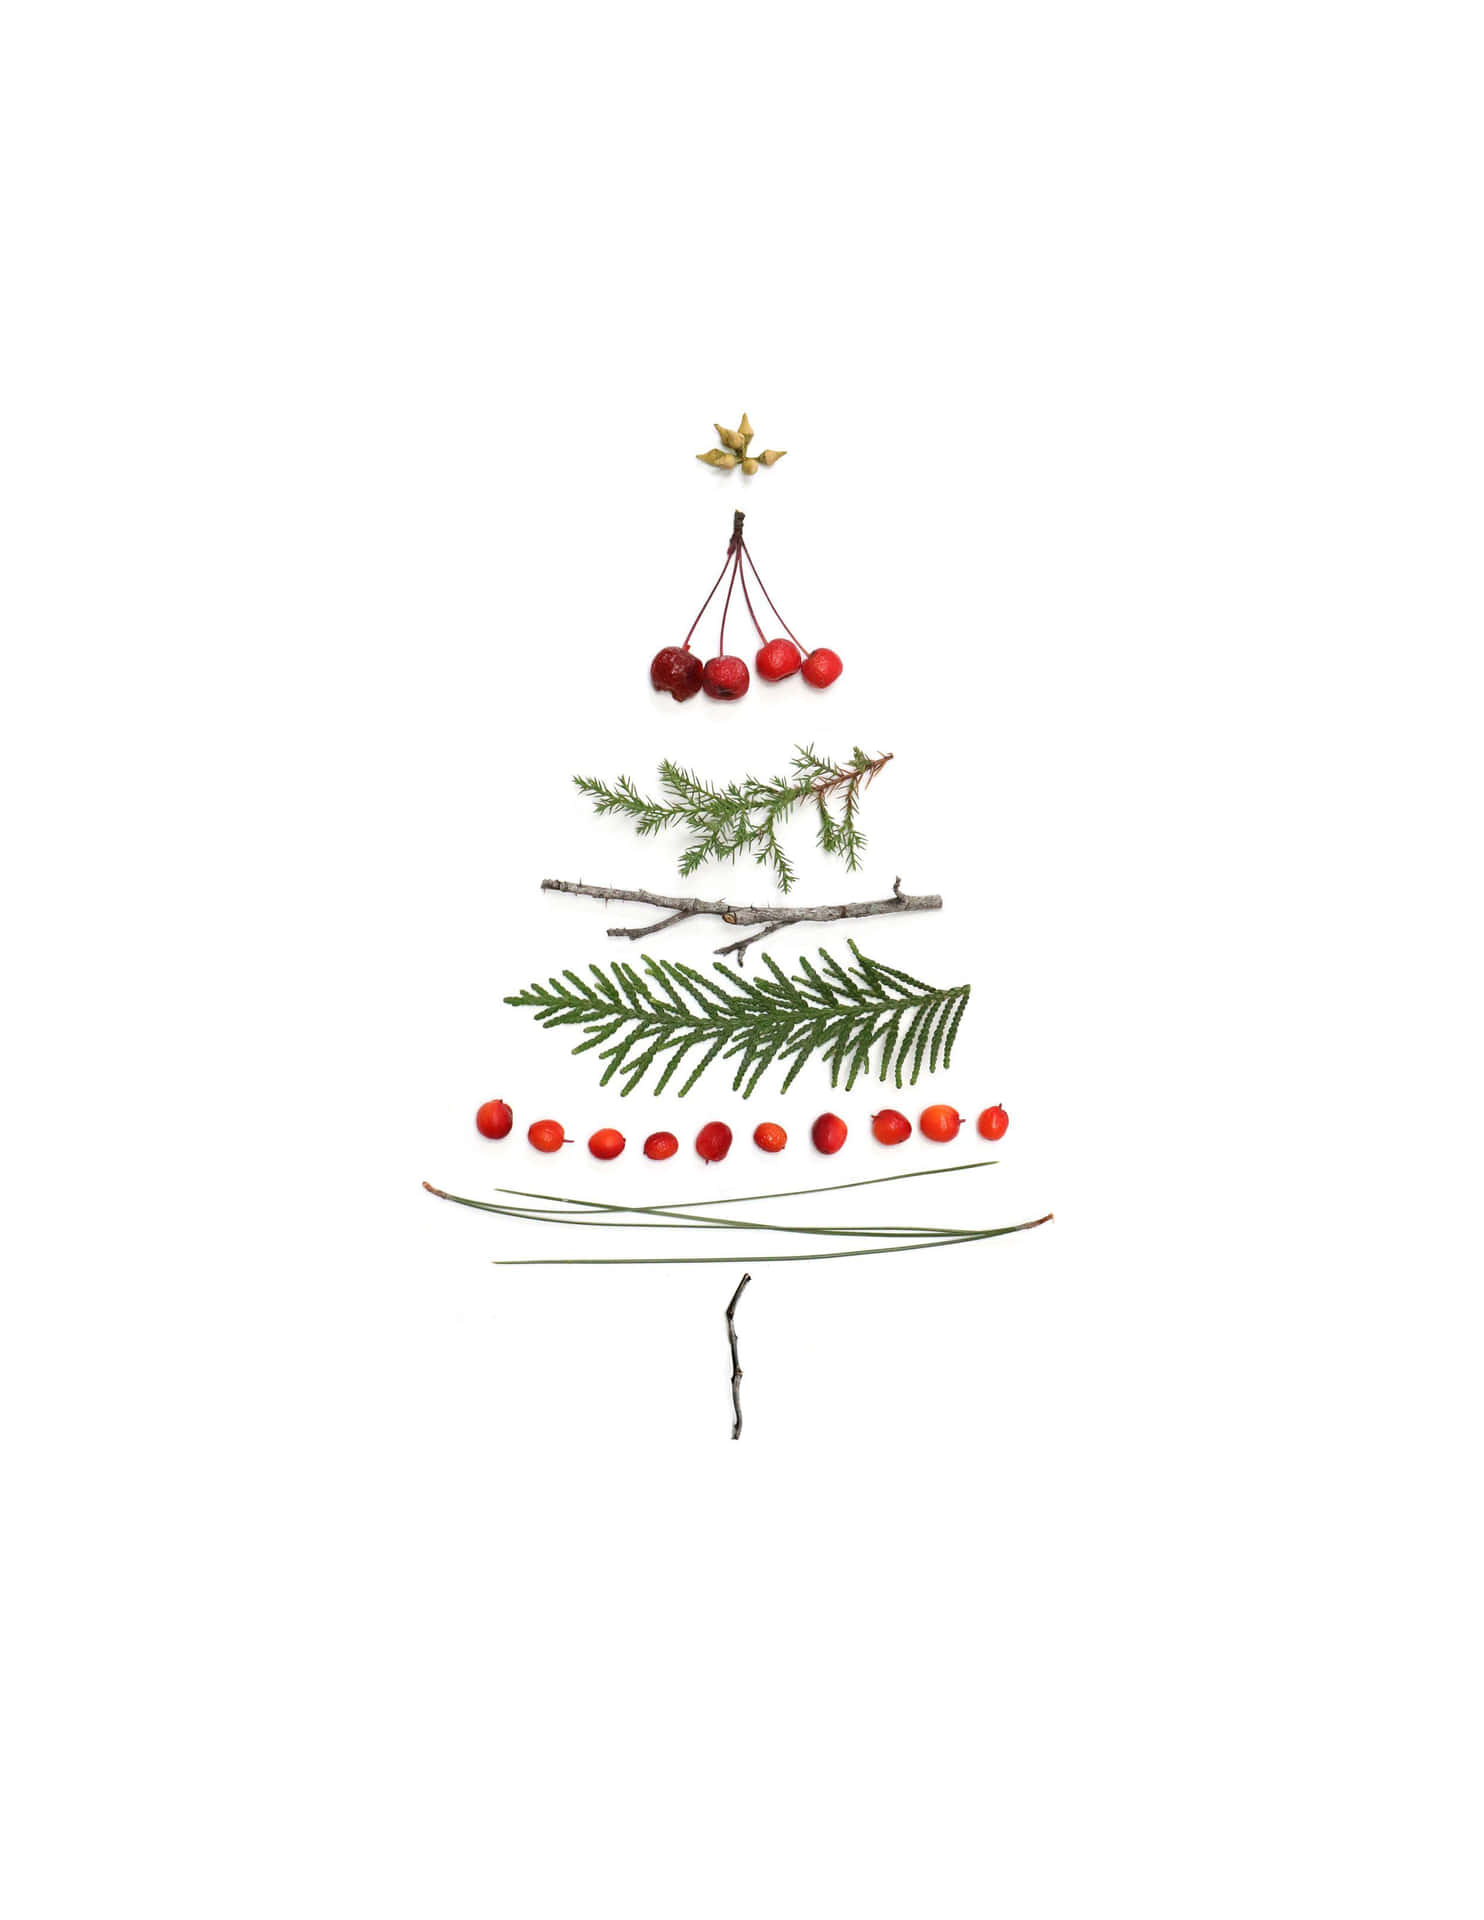 Minimalist Christmas Tree Art Wallpaper